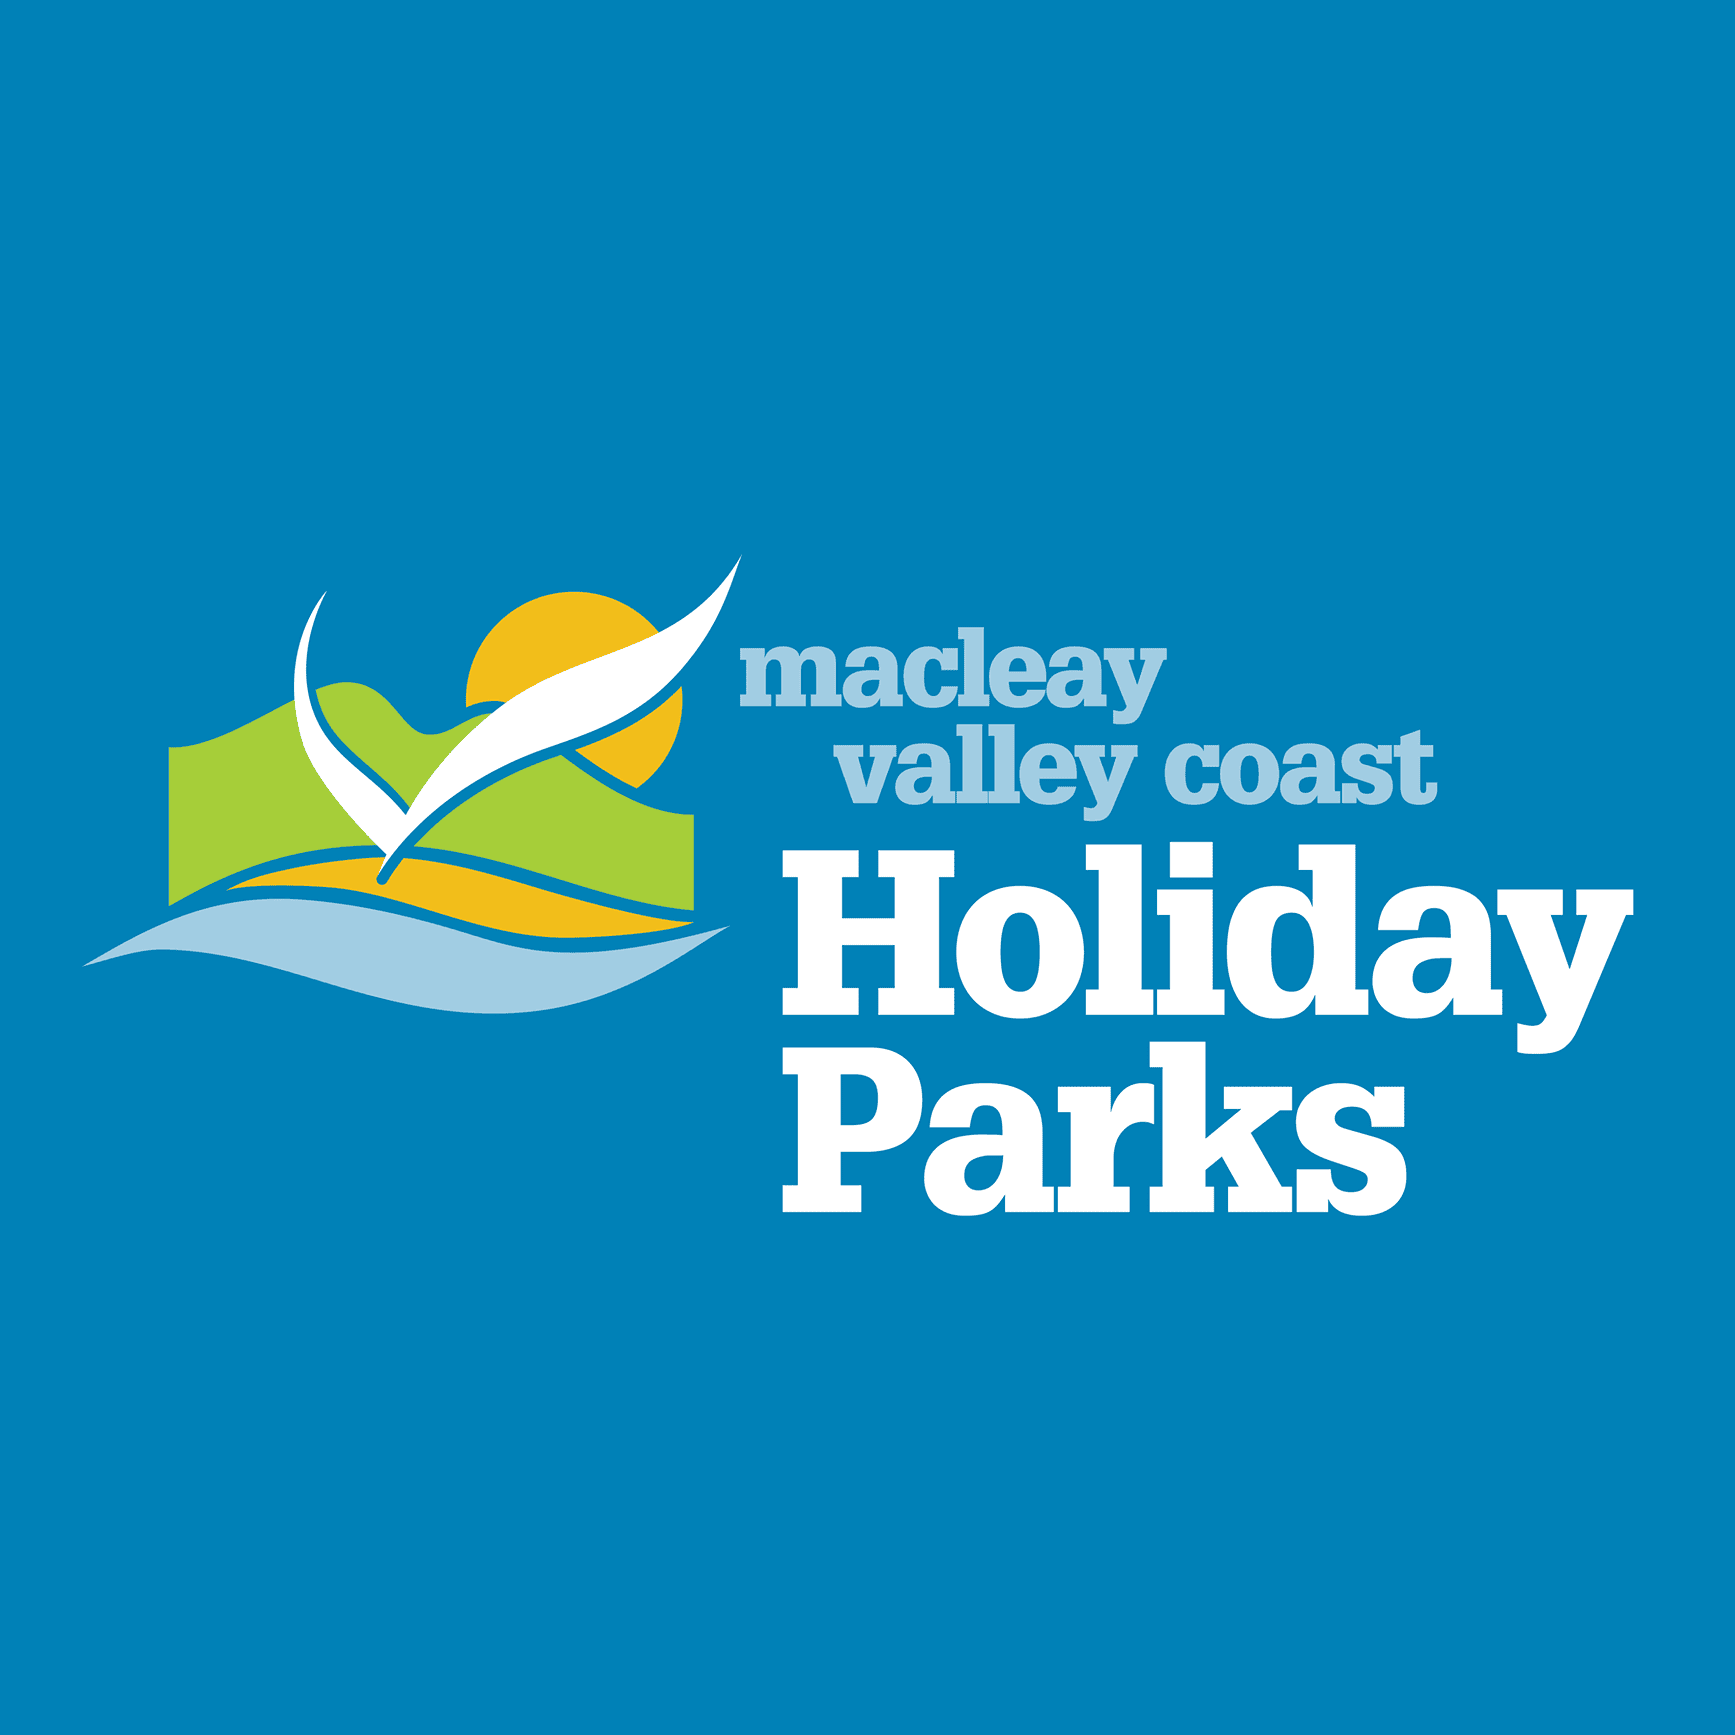 Macleay Valley Coast Holiday Parks